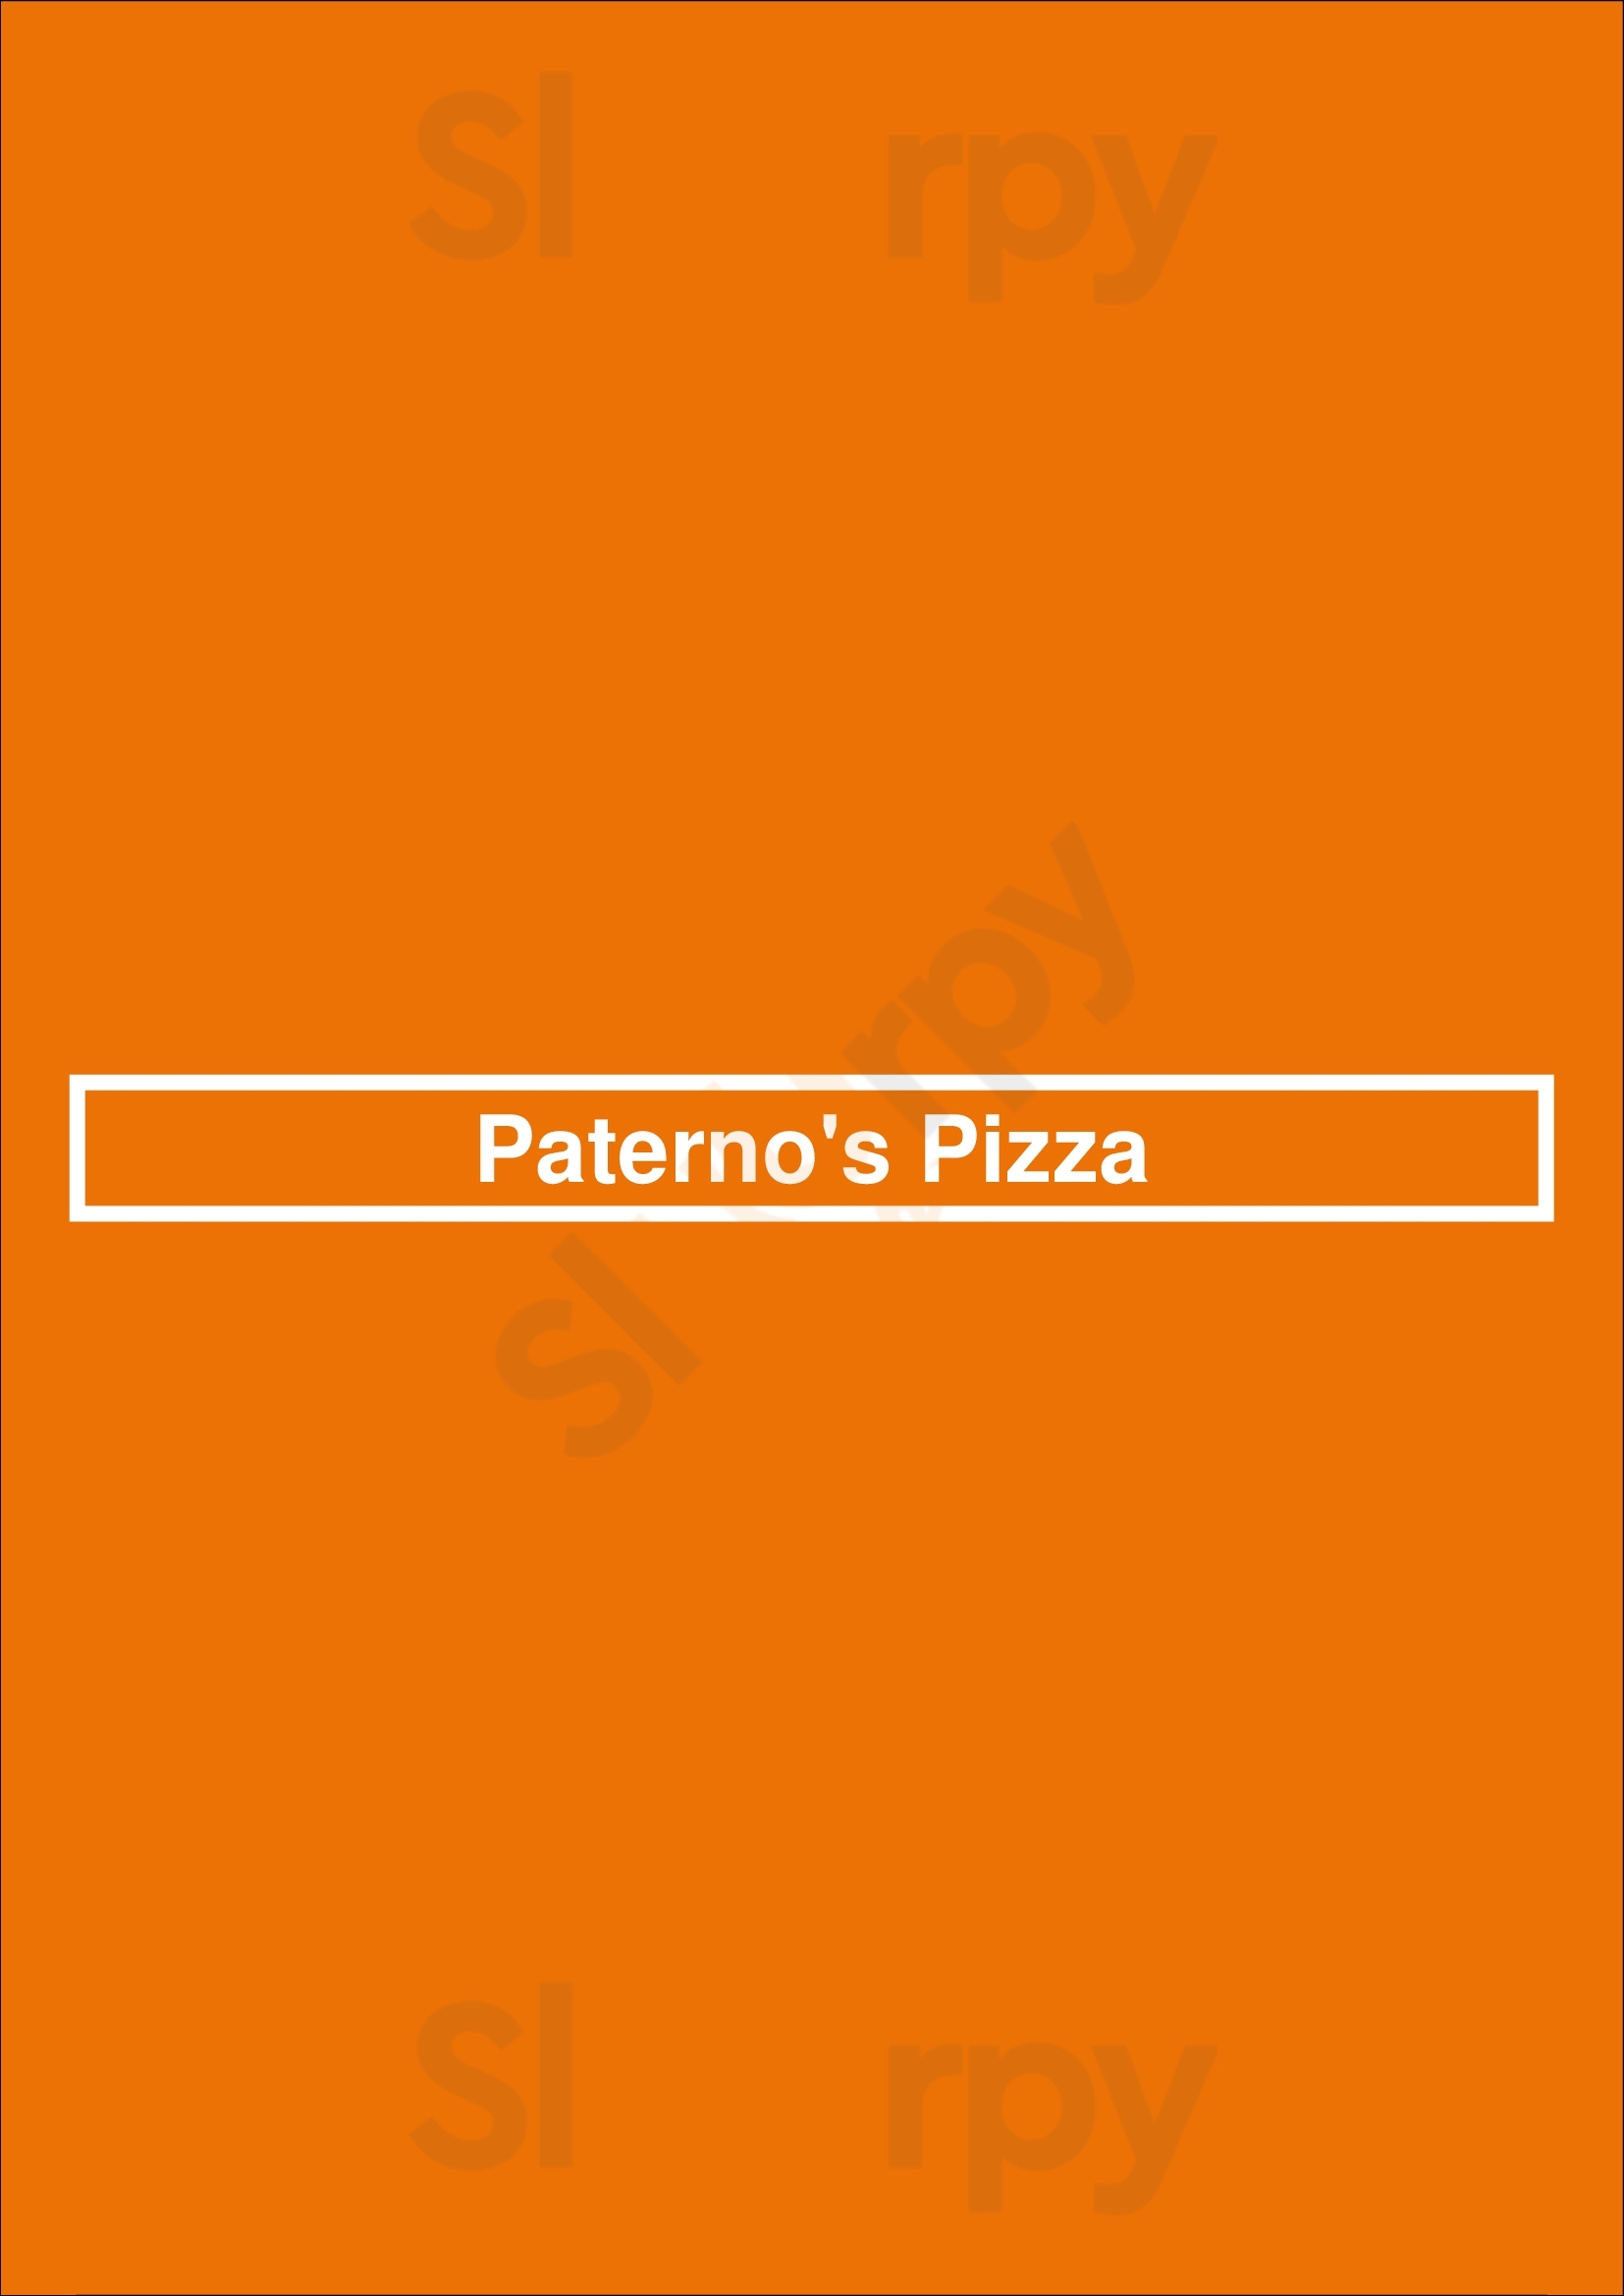 Paterno's Pizza Chicago Menu - 1